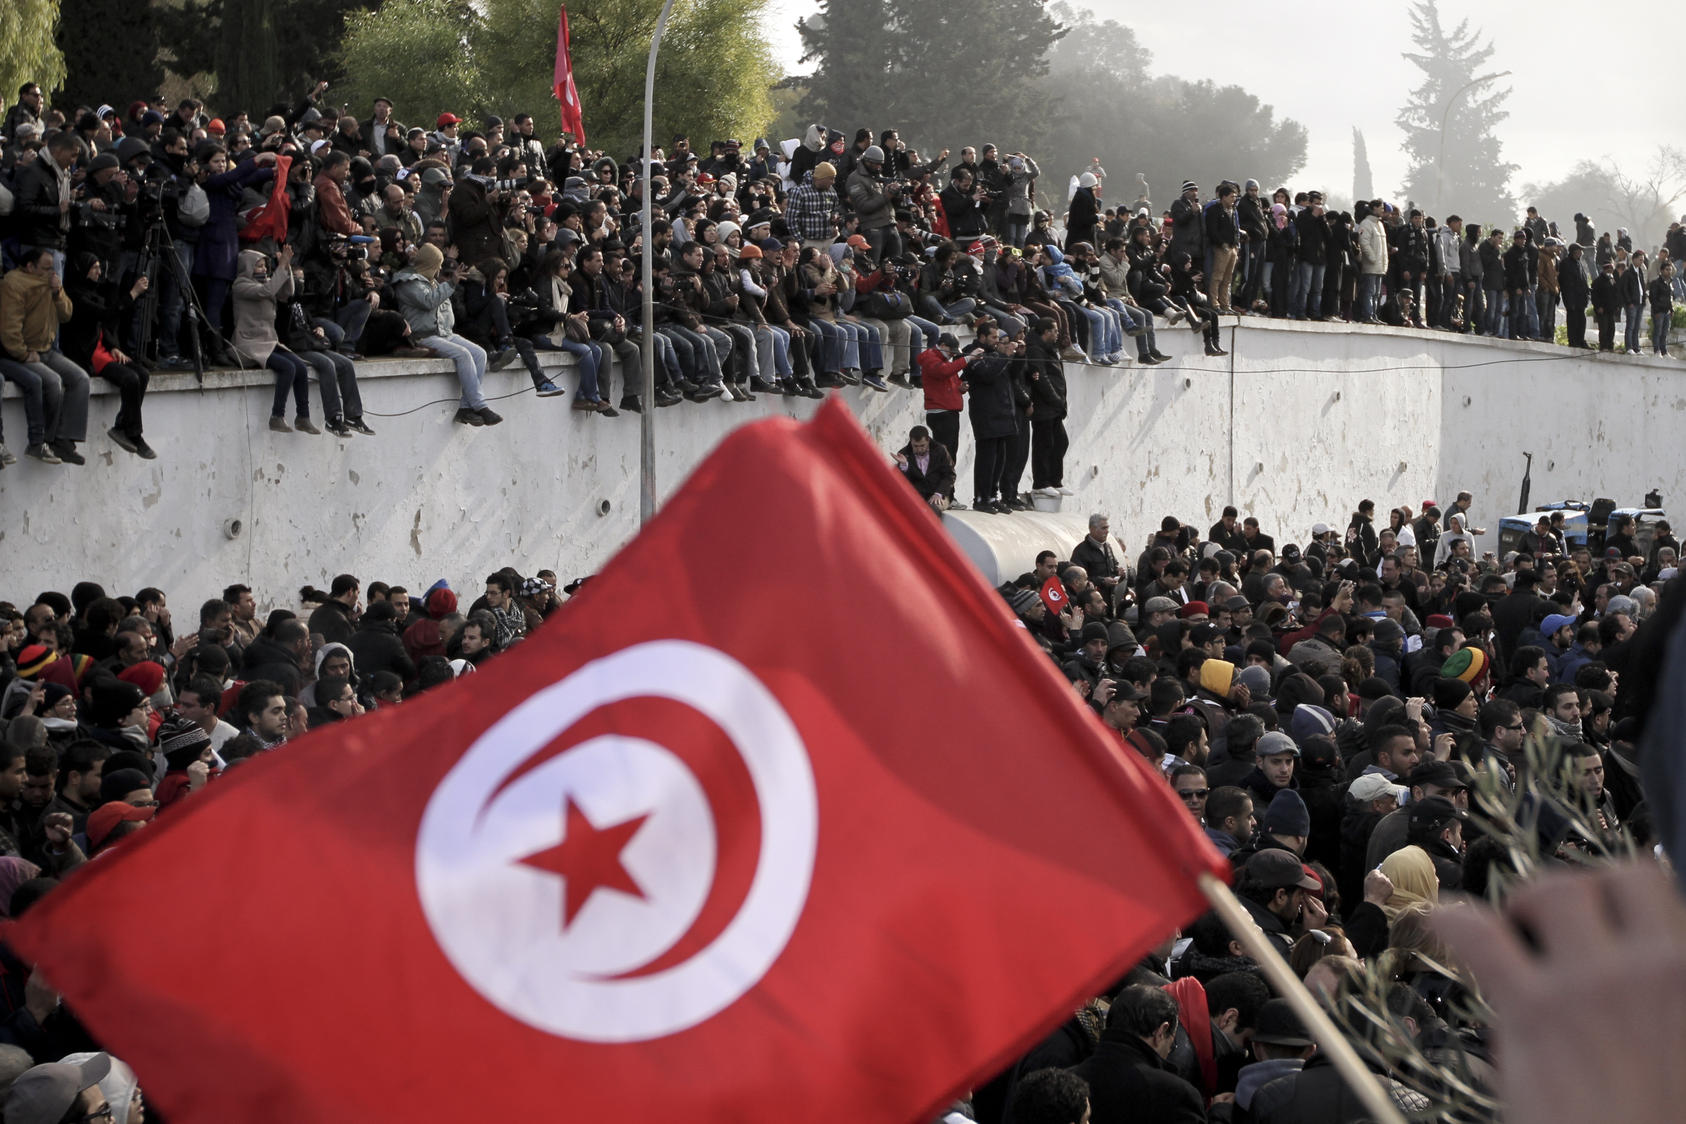 rally in tunisia